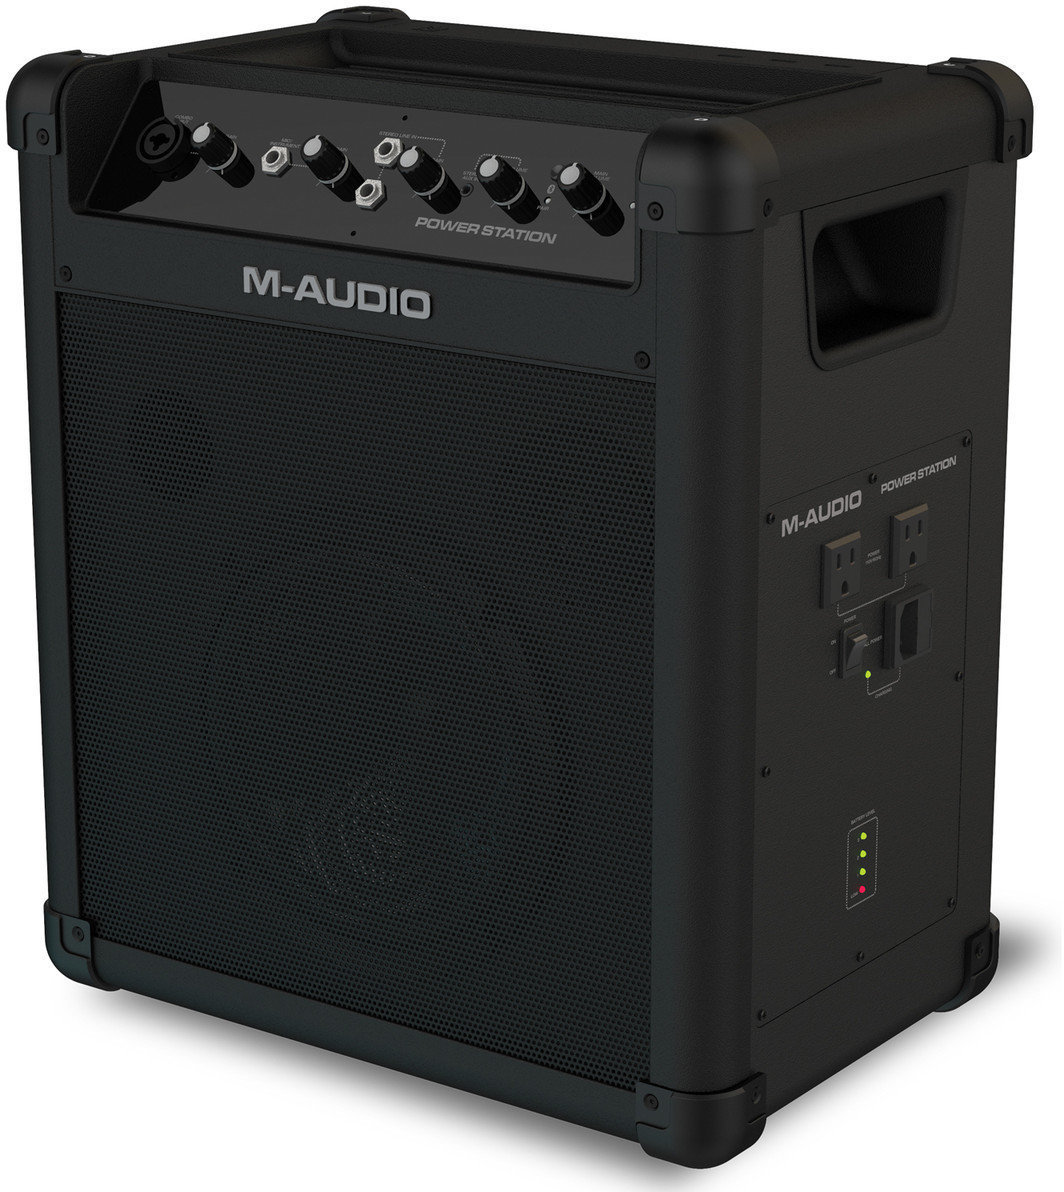 Portable Lautsprecher M-Audio Powerstation